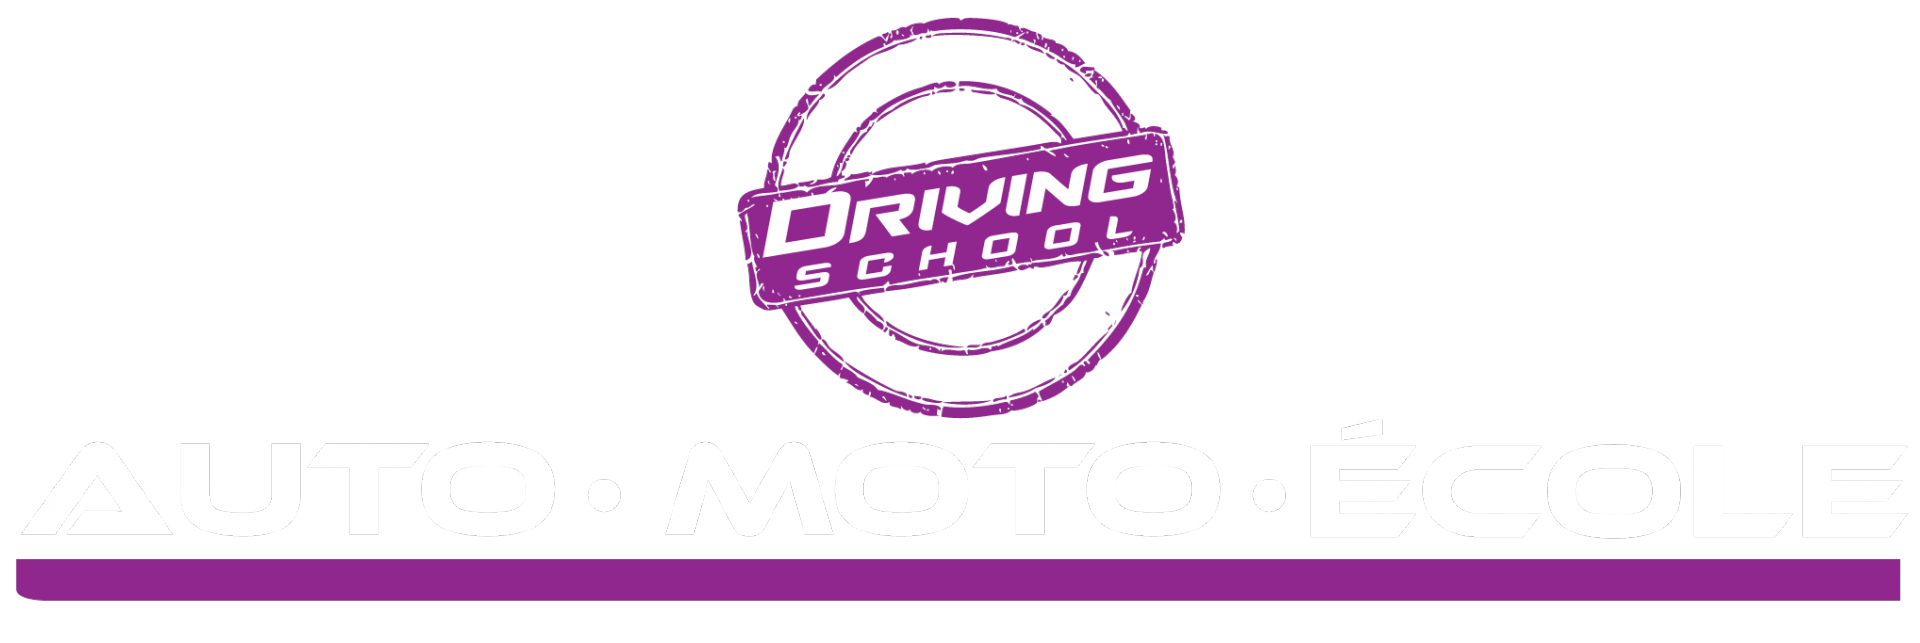 Auto Moto Ecole Driving School